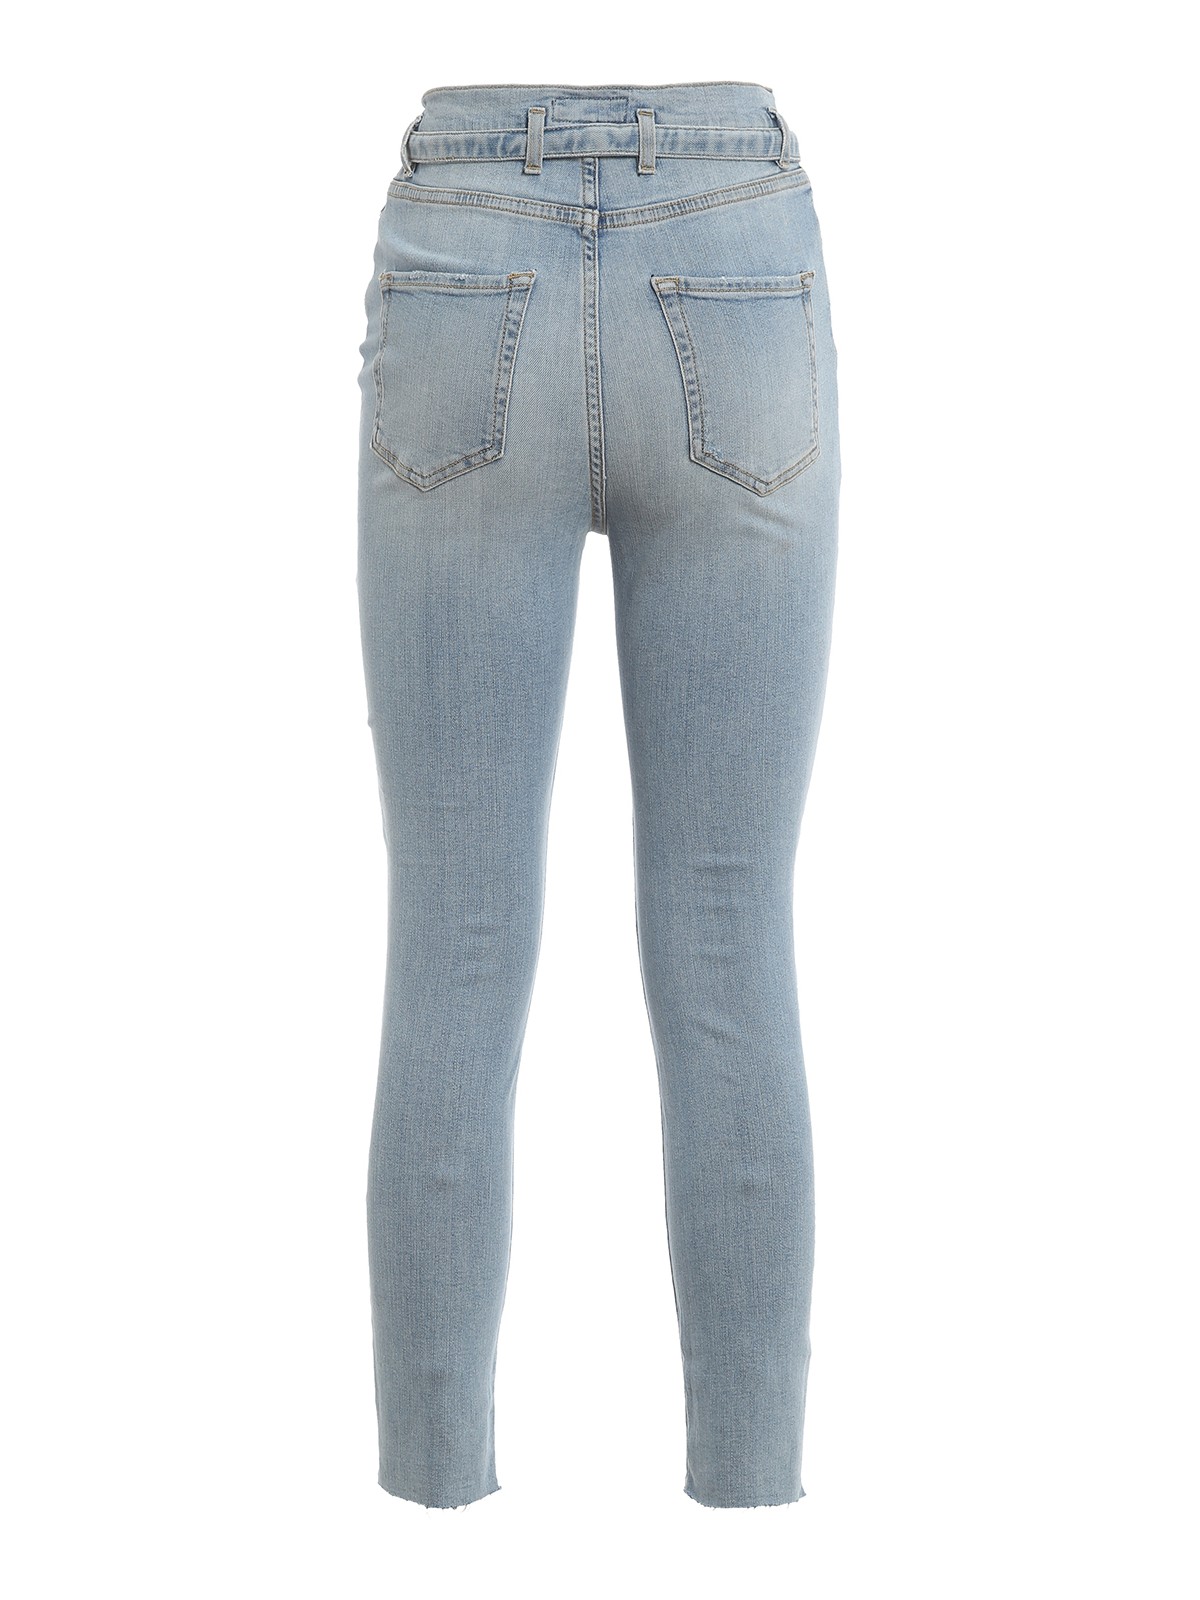 Skinny jeans Pinko - Susan 26 jeans - 1J10VXY78MG76 | Shop online at iKRIX